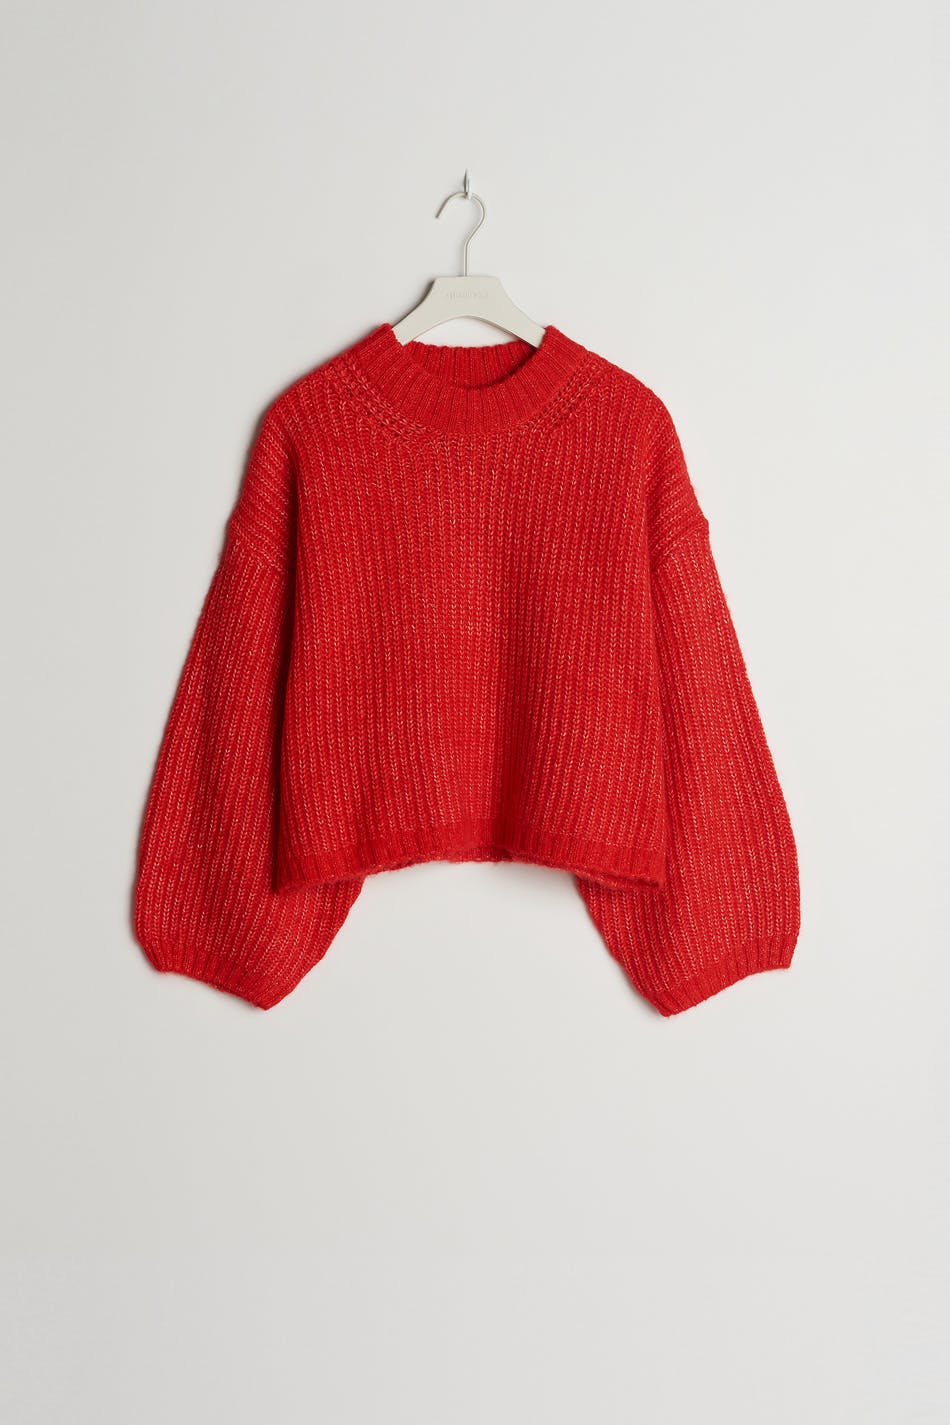 Lana petite knitted sweater